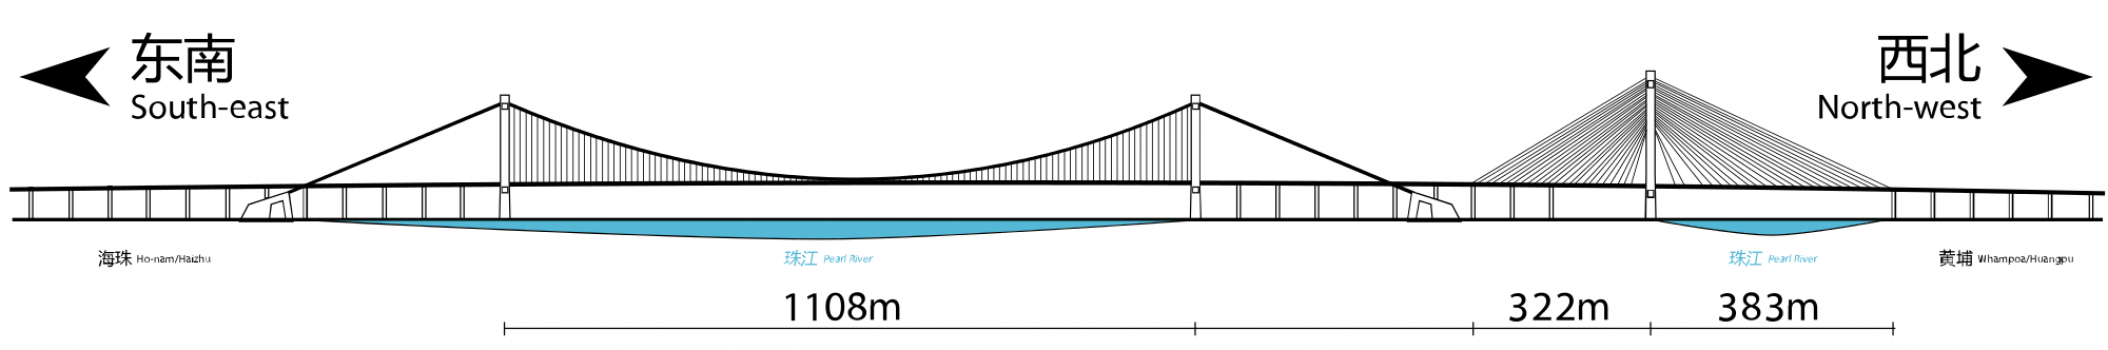 Elevation of the Huangpu Bridge 